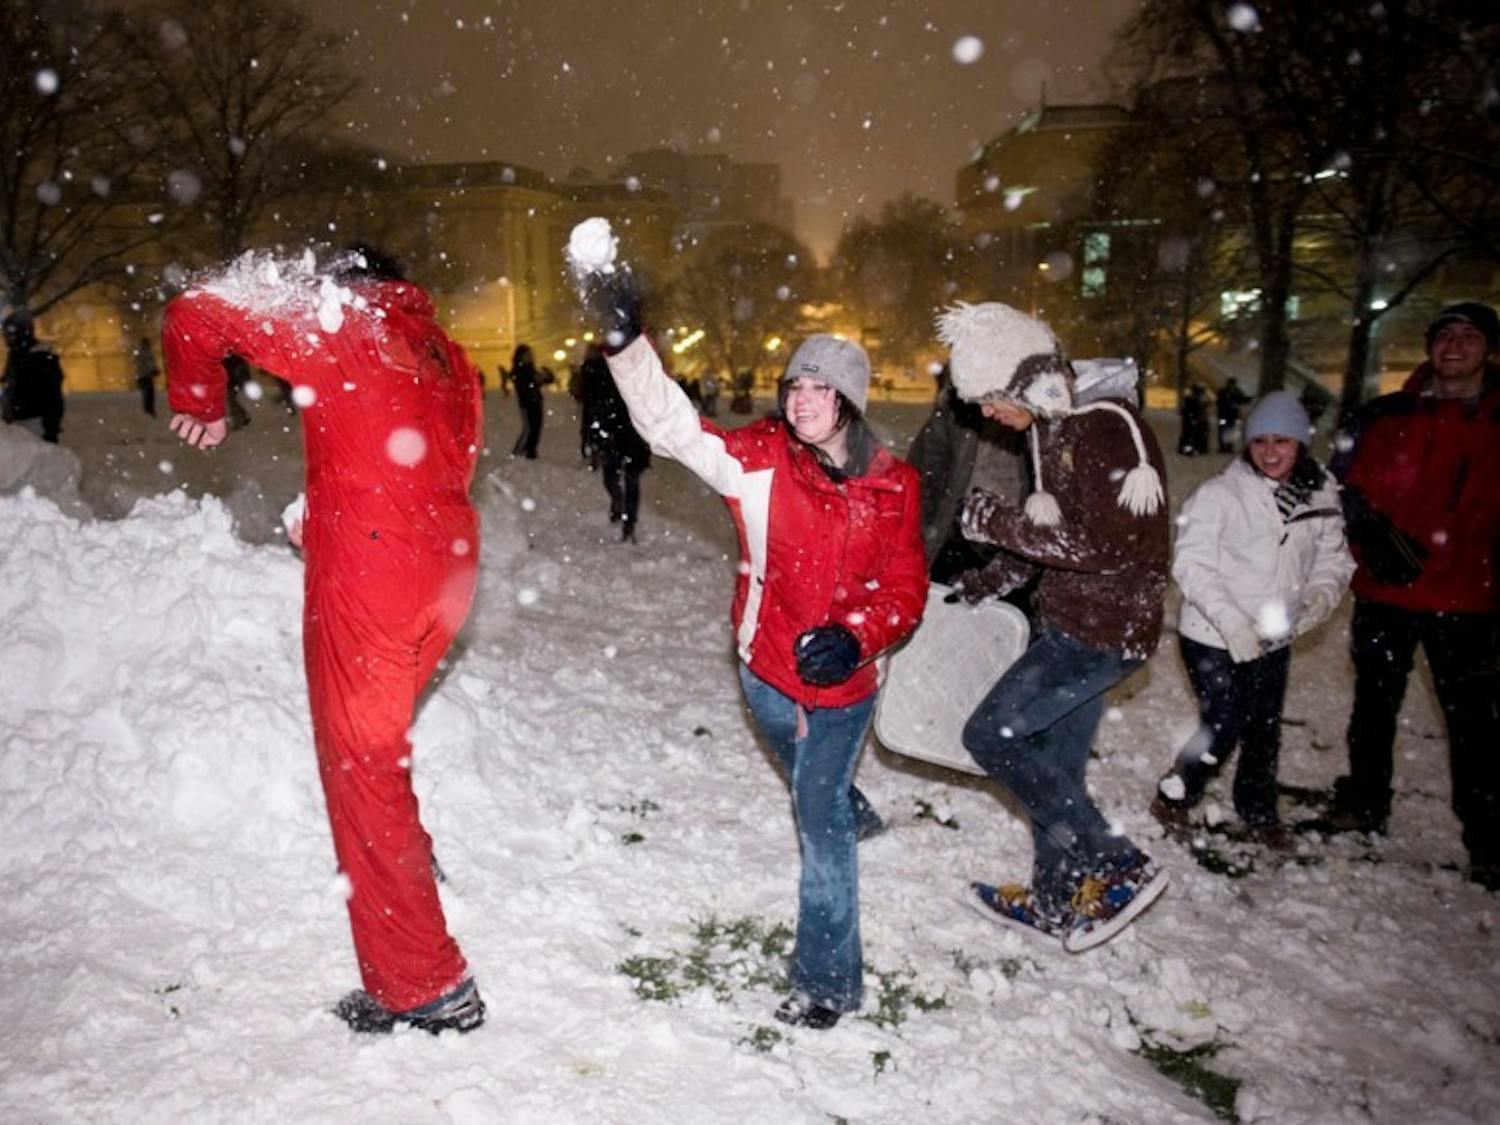 City prepared for snow, UW cancels classes